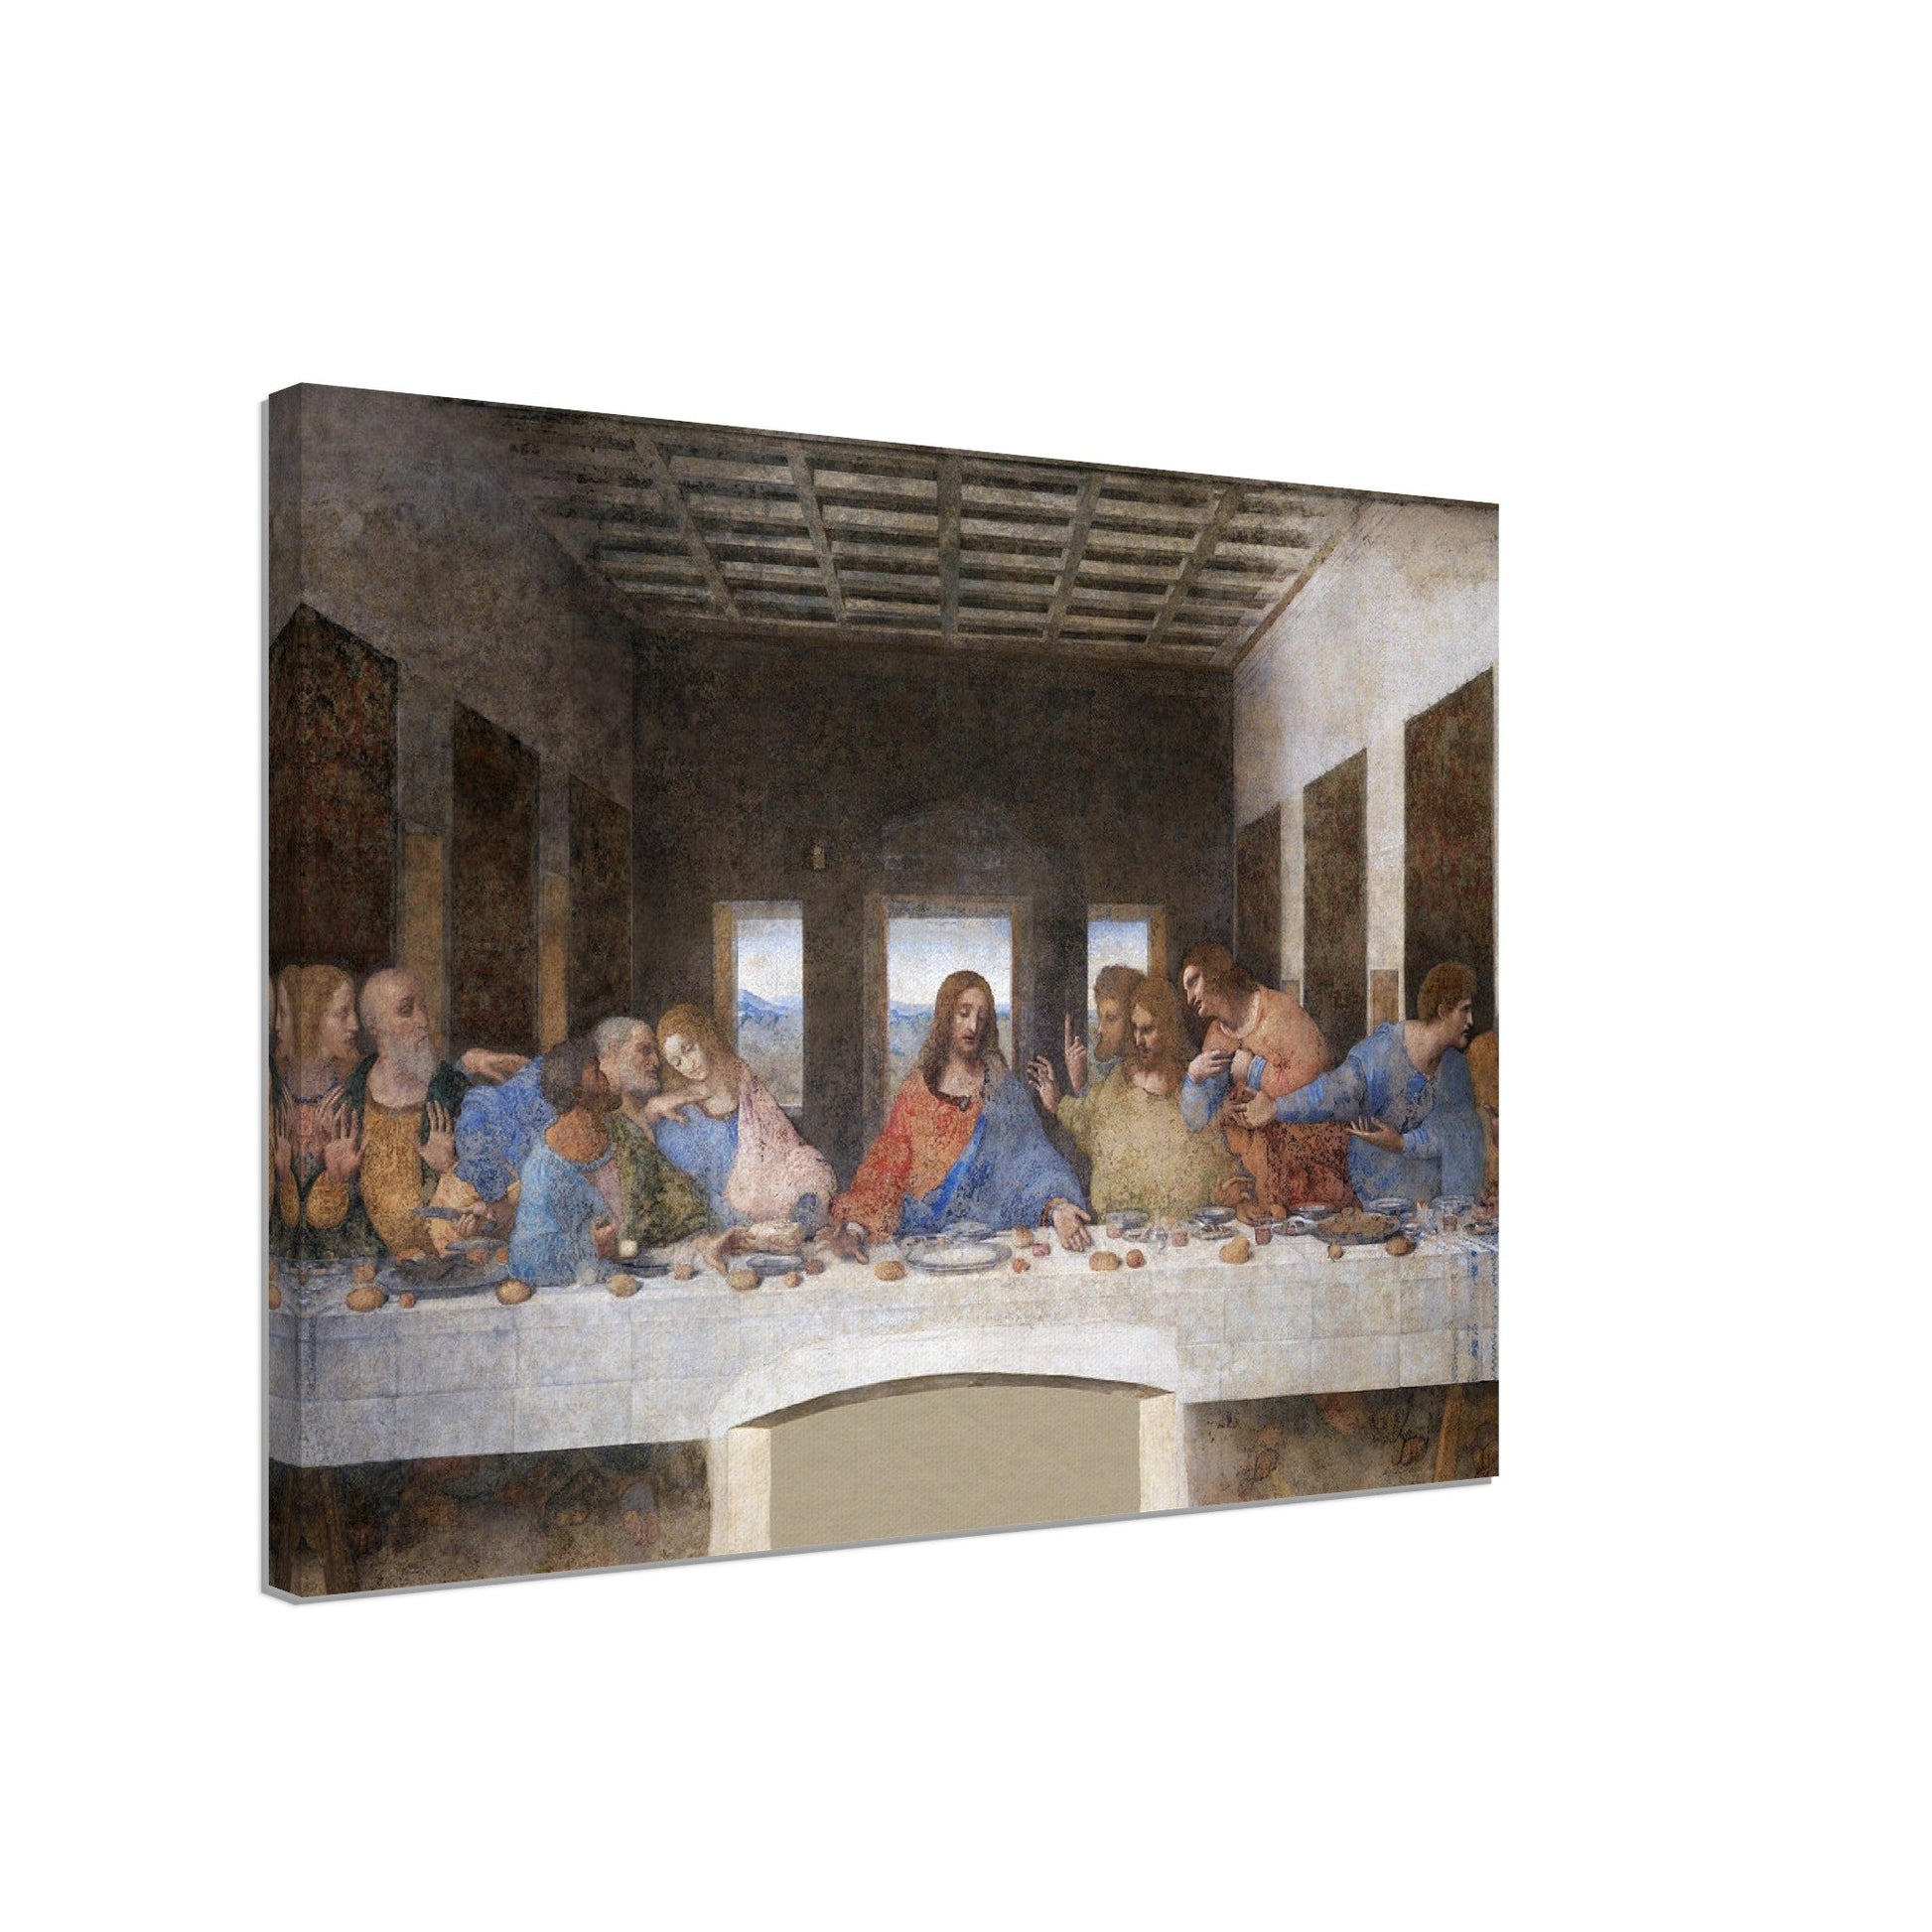 The Last Supper - Leonardo da Vinci Wall Art - Print Material - Master's Gaze